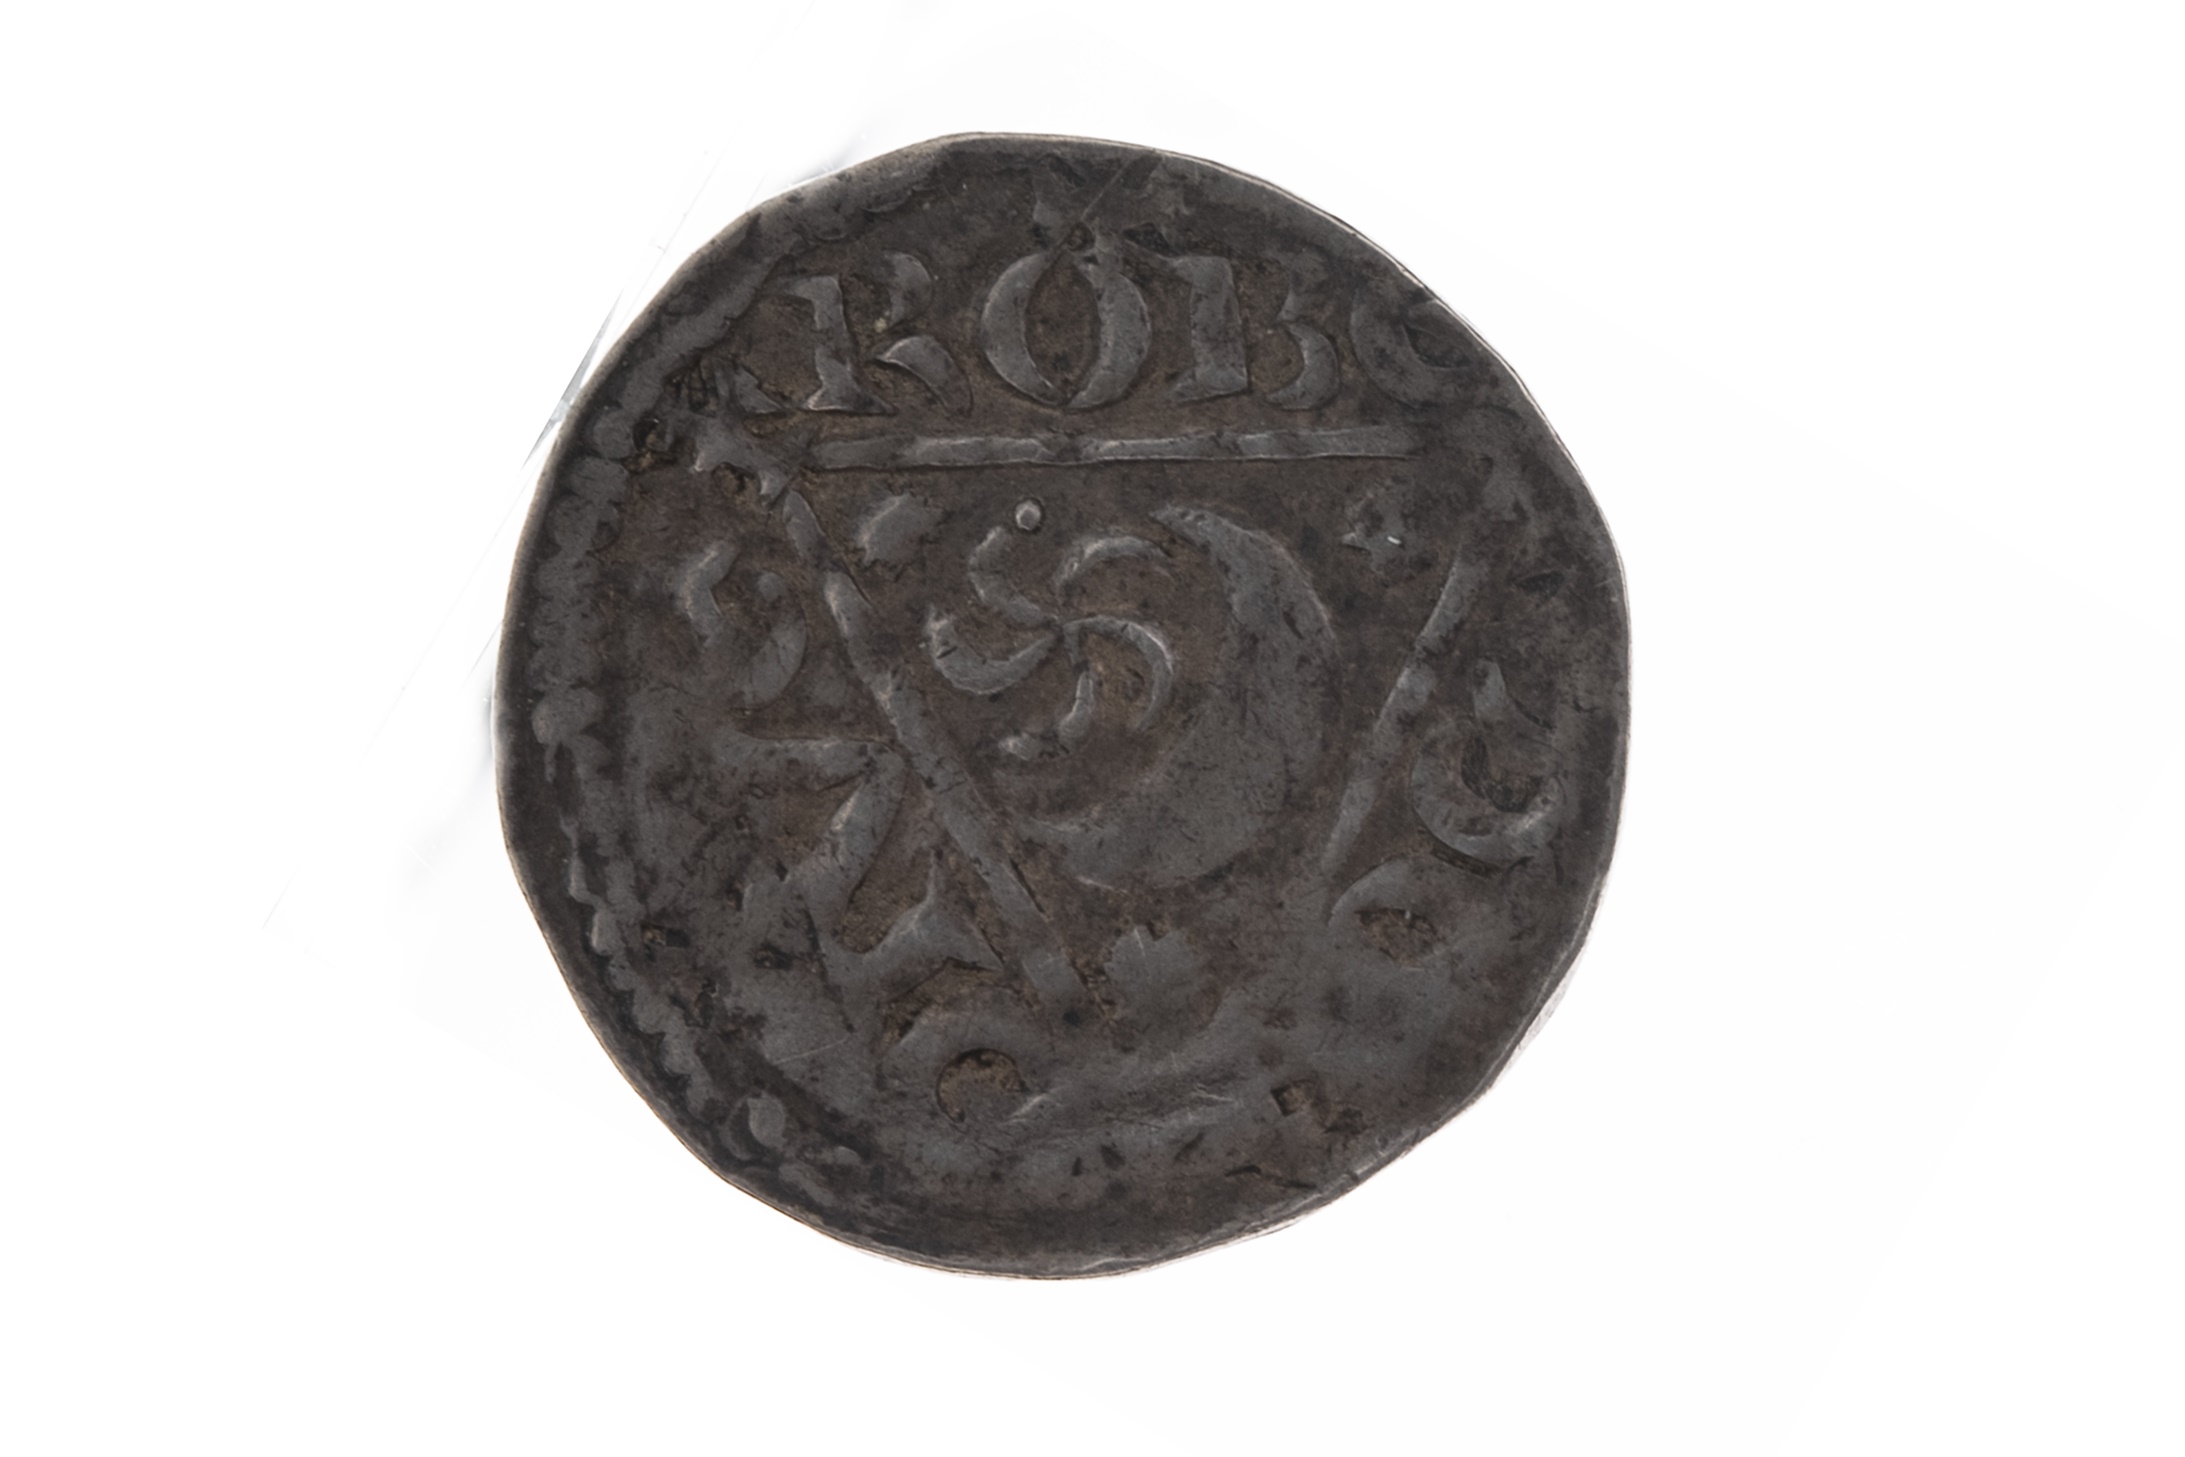 IRELAND - JOHN (AS LORD, 1172 - 1199) PENNY - Image 2 of 2